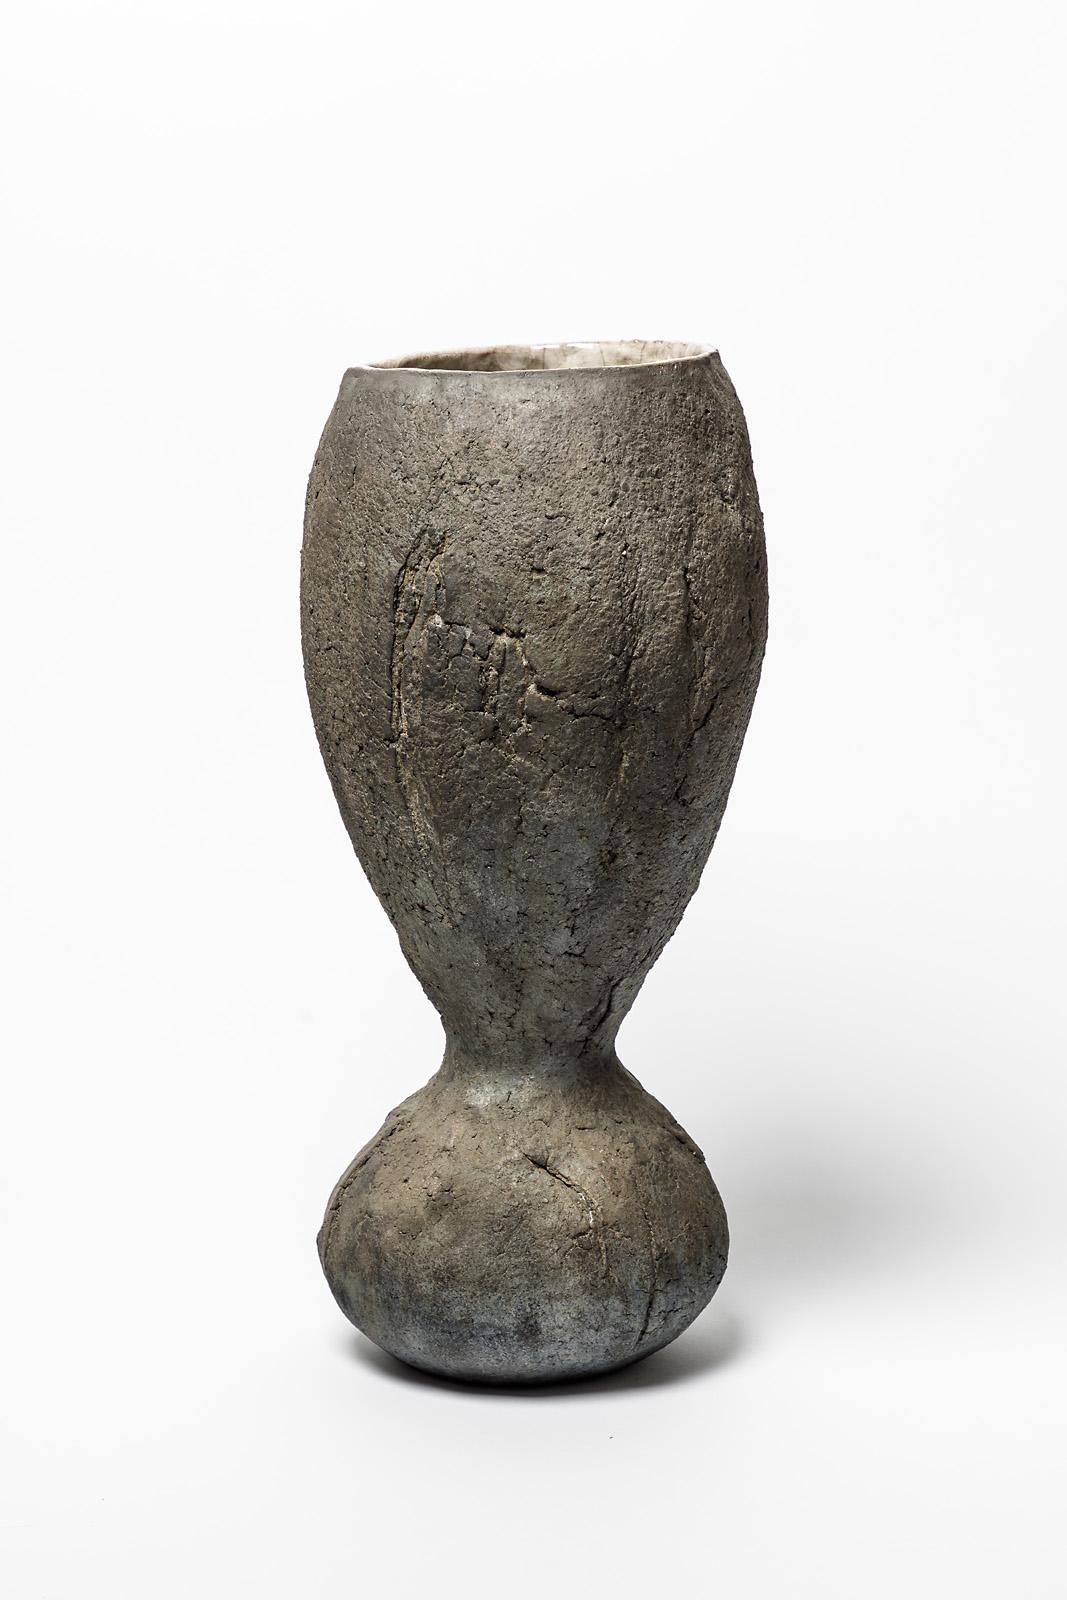 A ceramic vase by Gisele Buthod- Garçon.
Perfect original conditions.
Signed under the base.
Unique piece.
Circa 2005.